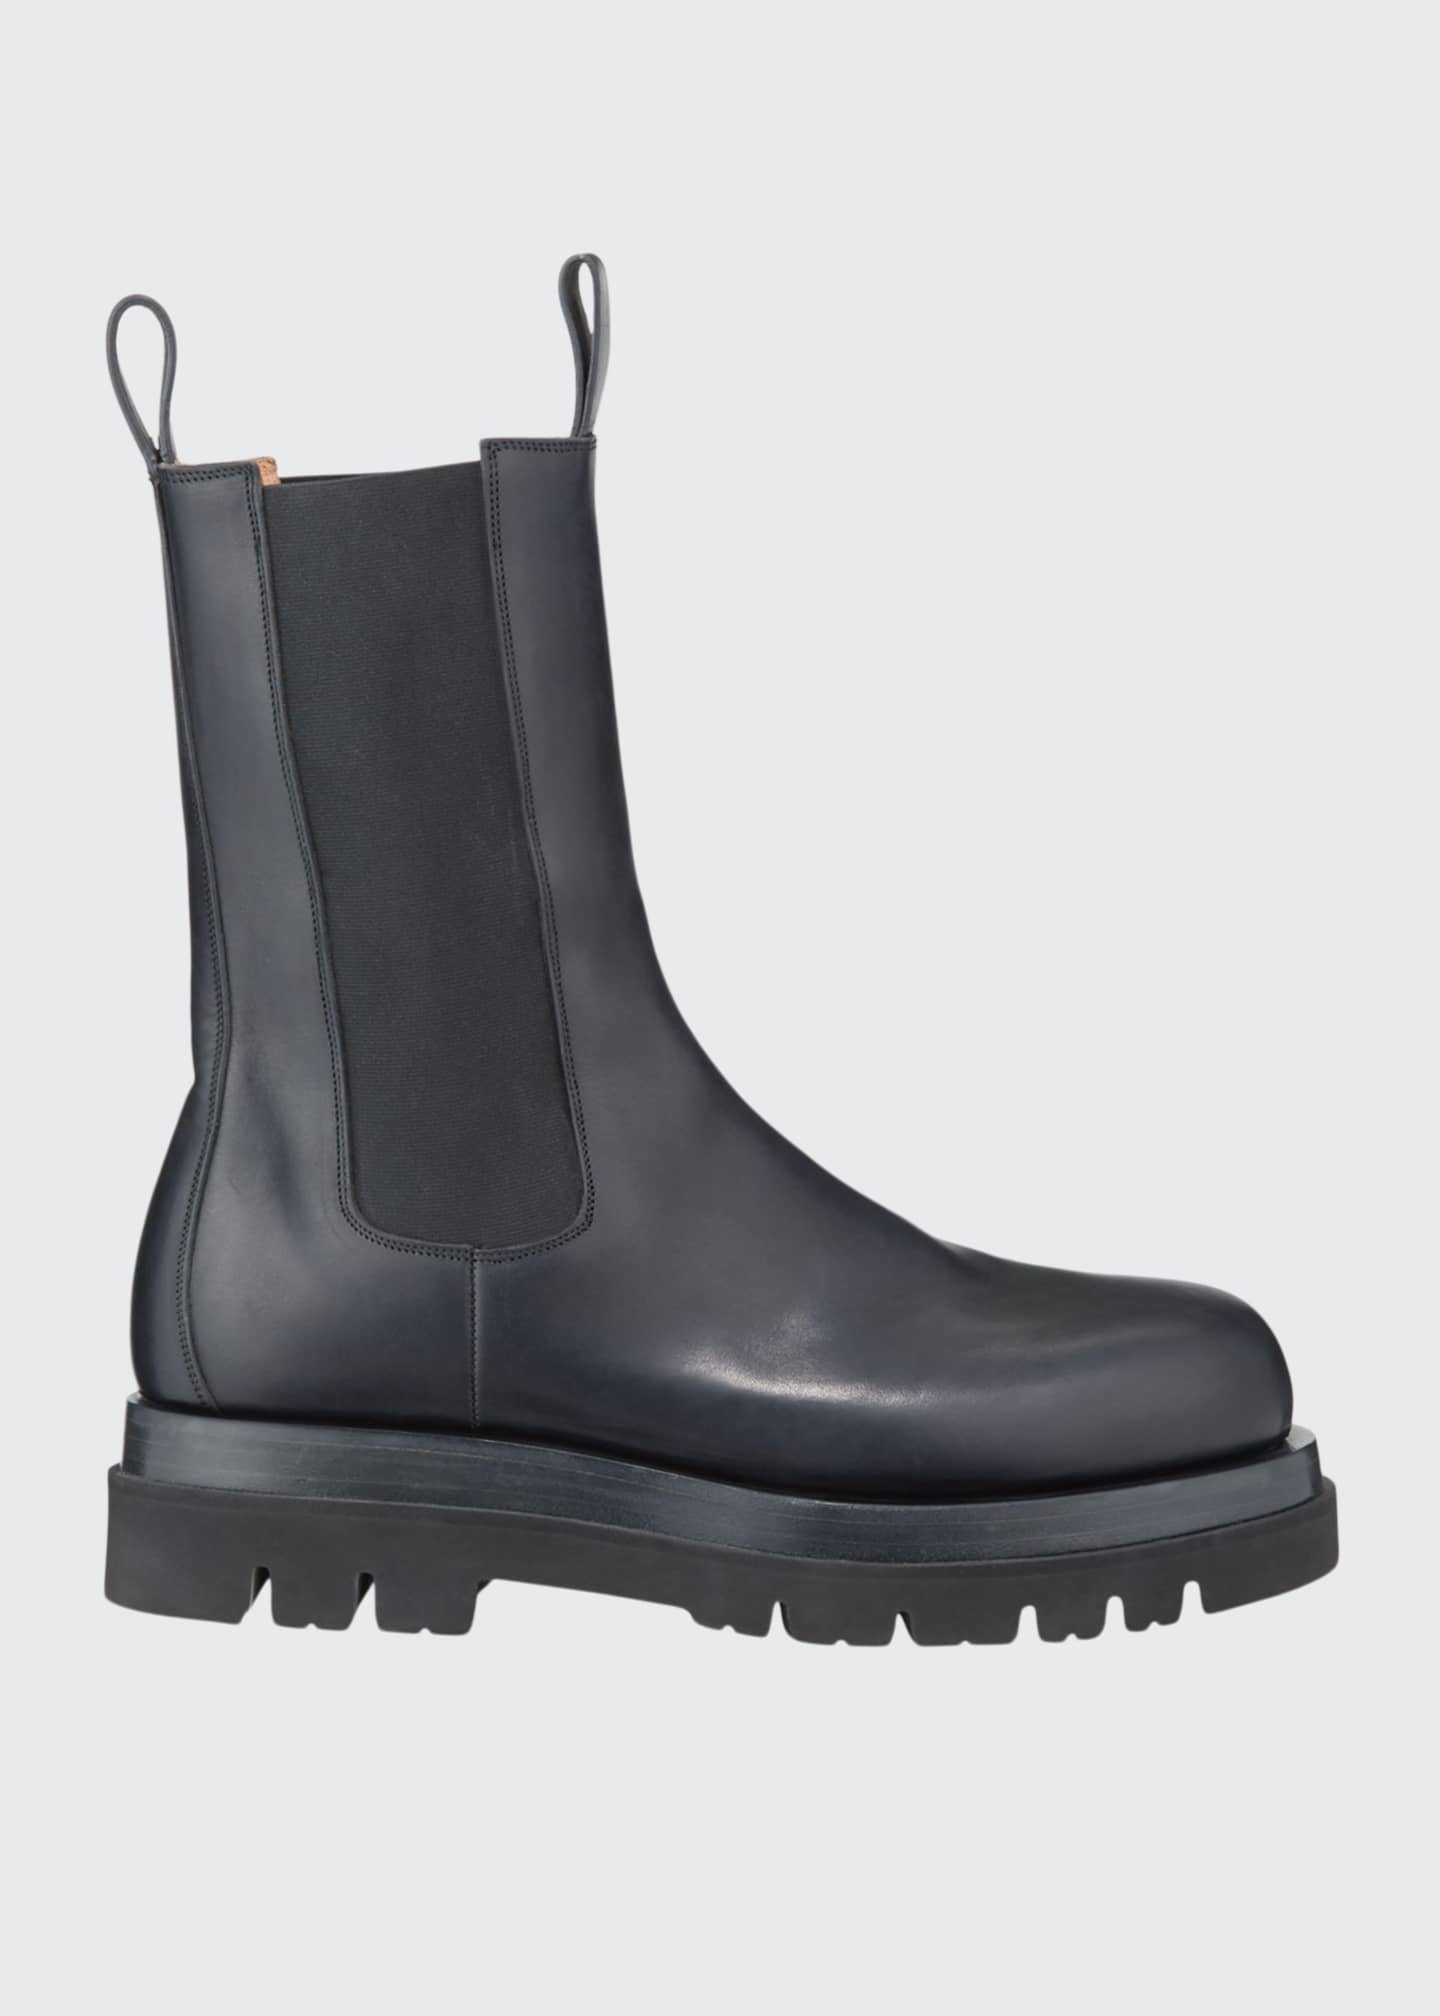 Bottega Men's Leather Chelsea LugSole Boots